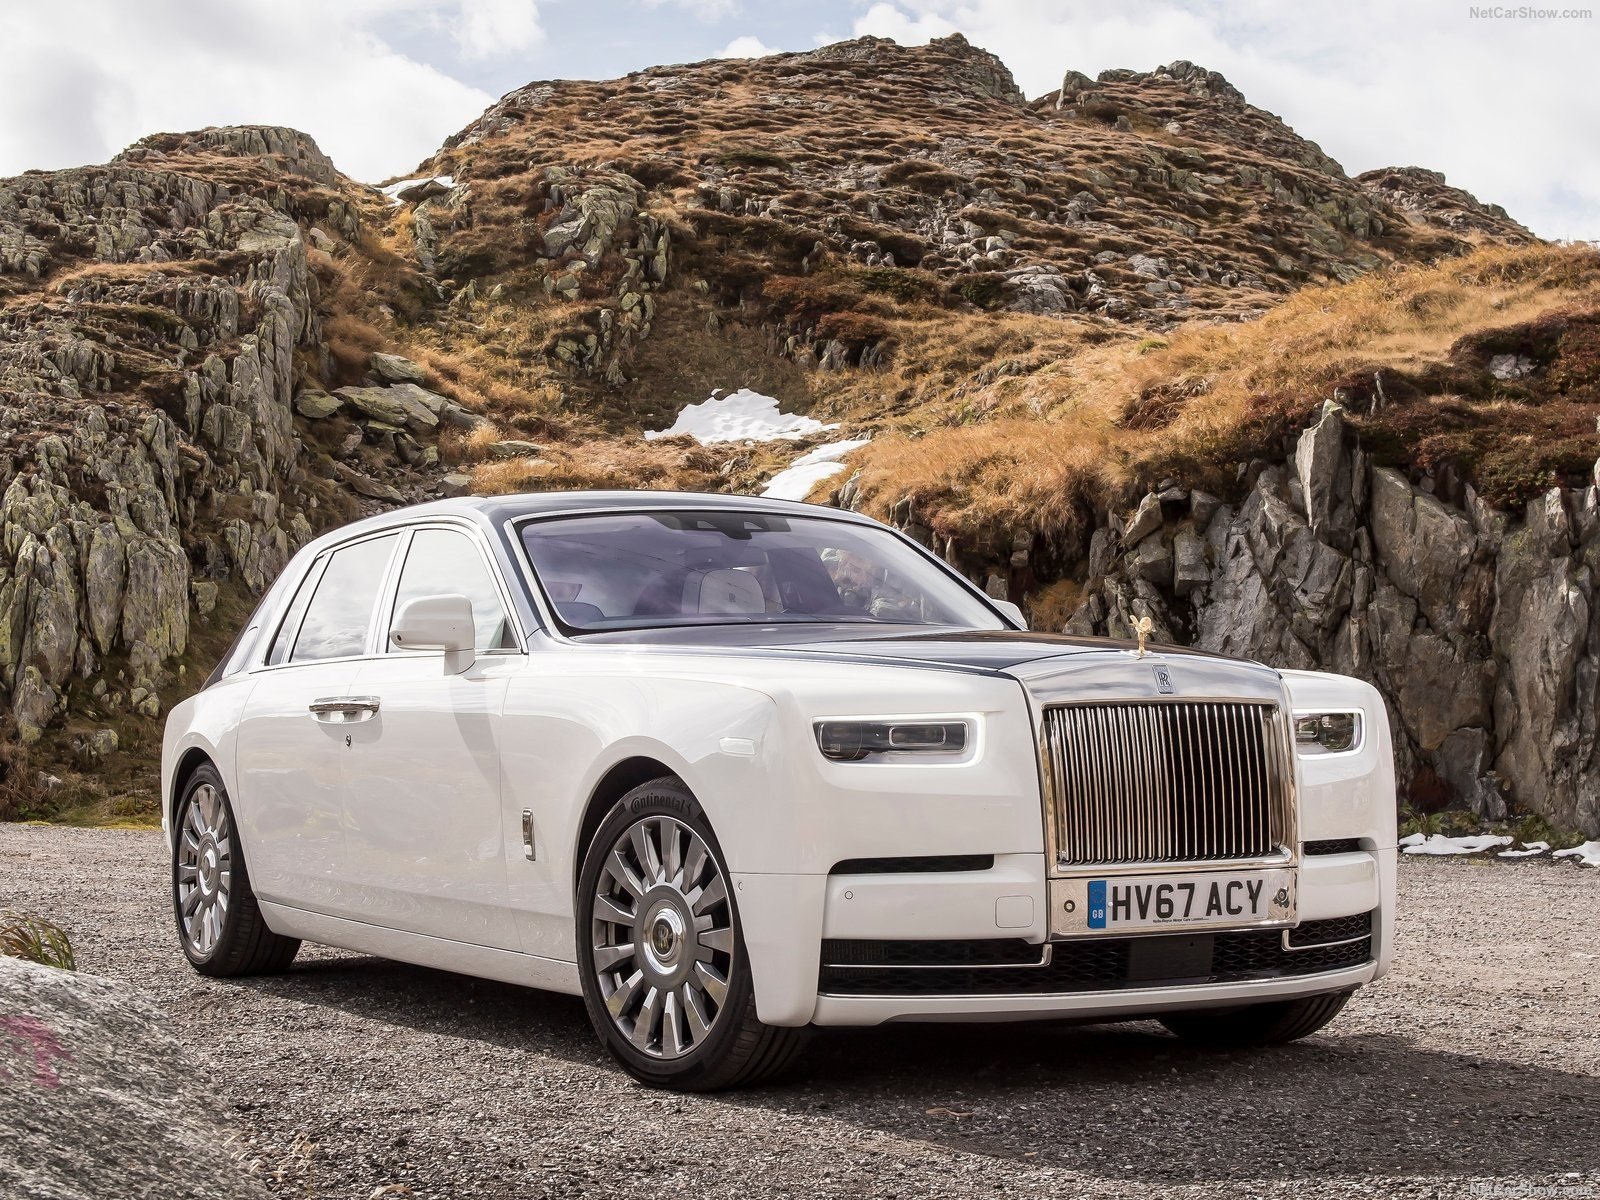 2022 Rolls Royce Phantom Exterior Dimensions: Colors Options & Accessories